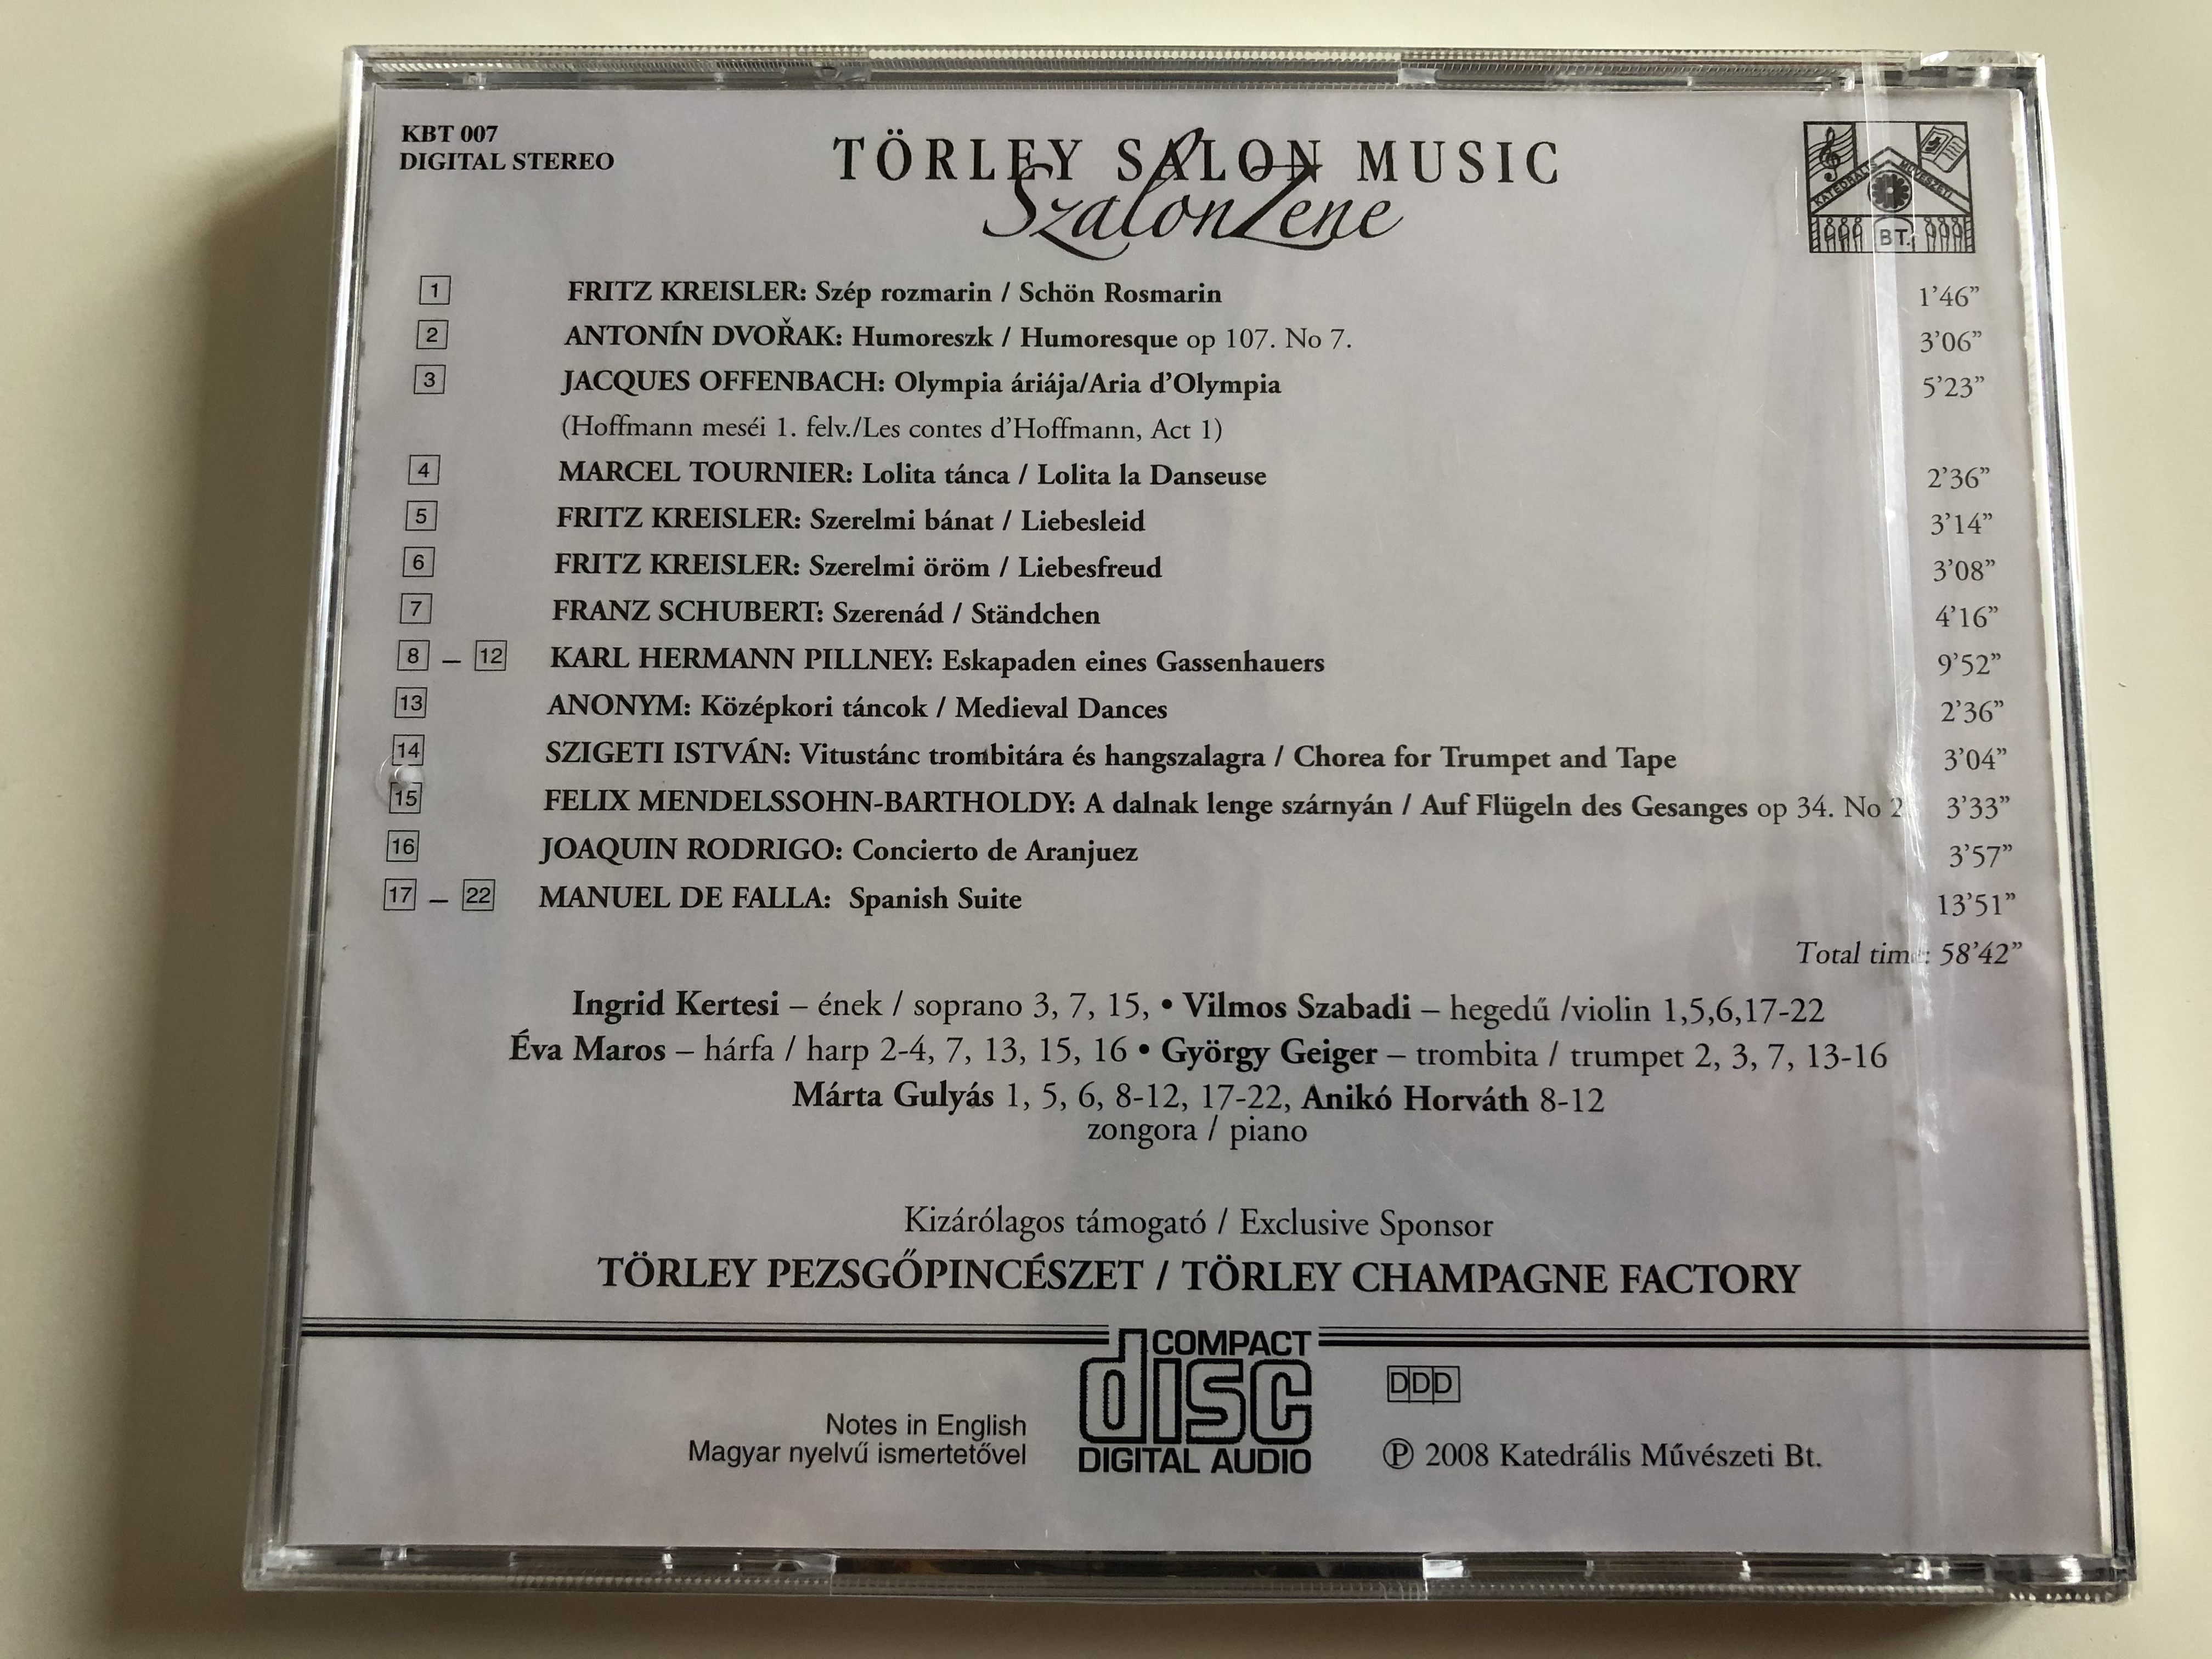 torley-salon-music-szalon-zene-kreisler-dvorak-offenbach-tournier-schubert-pillney-szigeti-mendelssohn-rodrigo-defalla-katedralis-muveszeti-bt.-audio-cd-2008-stereo-kbt-007-3-.jpg